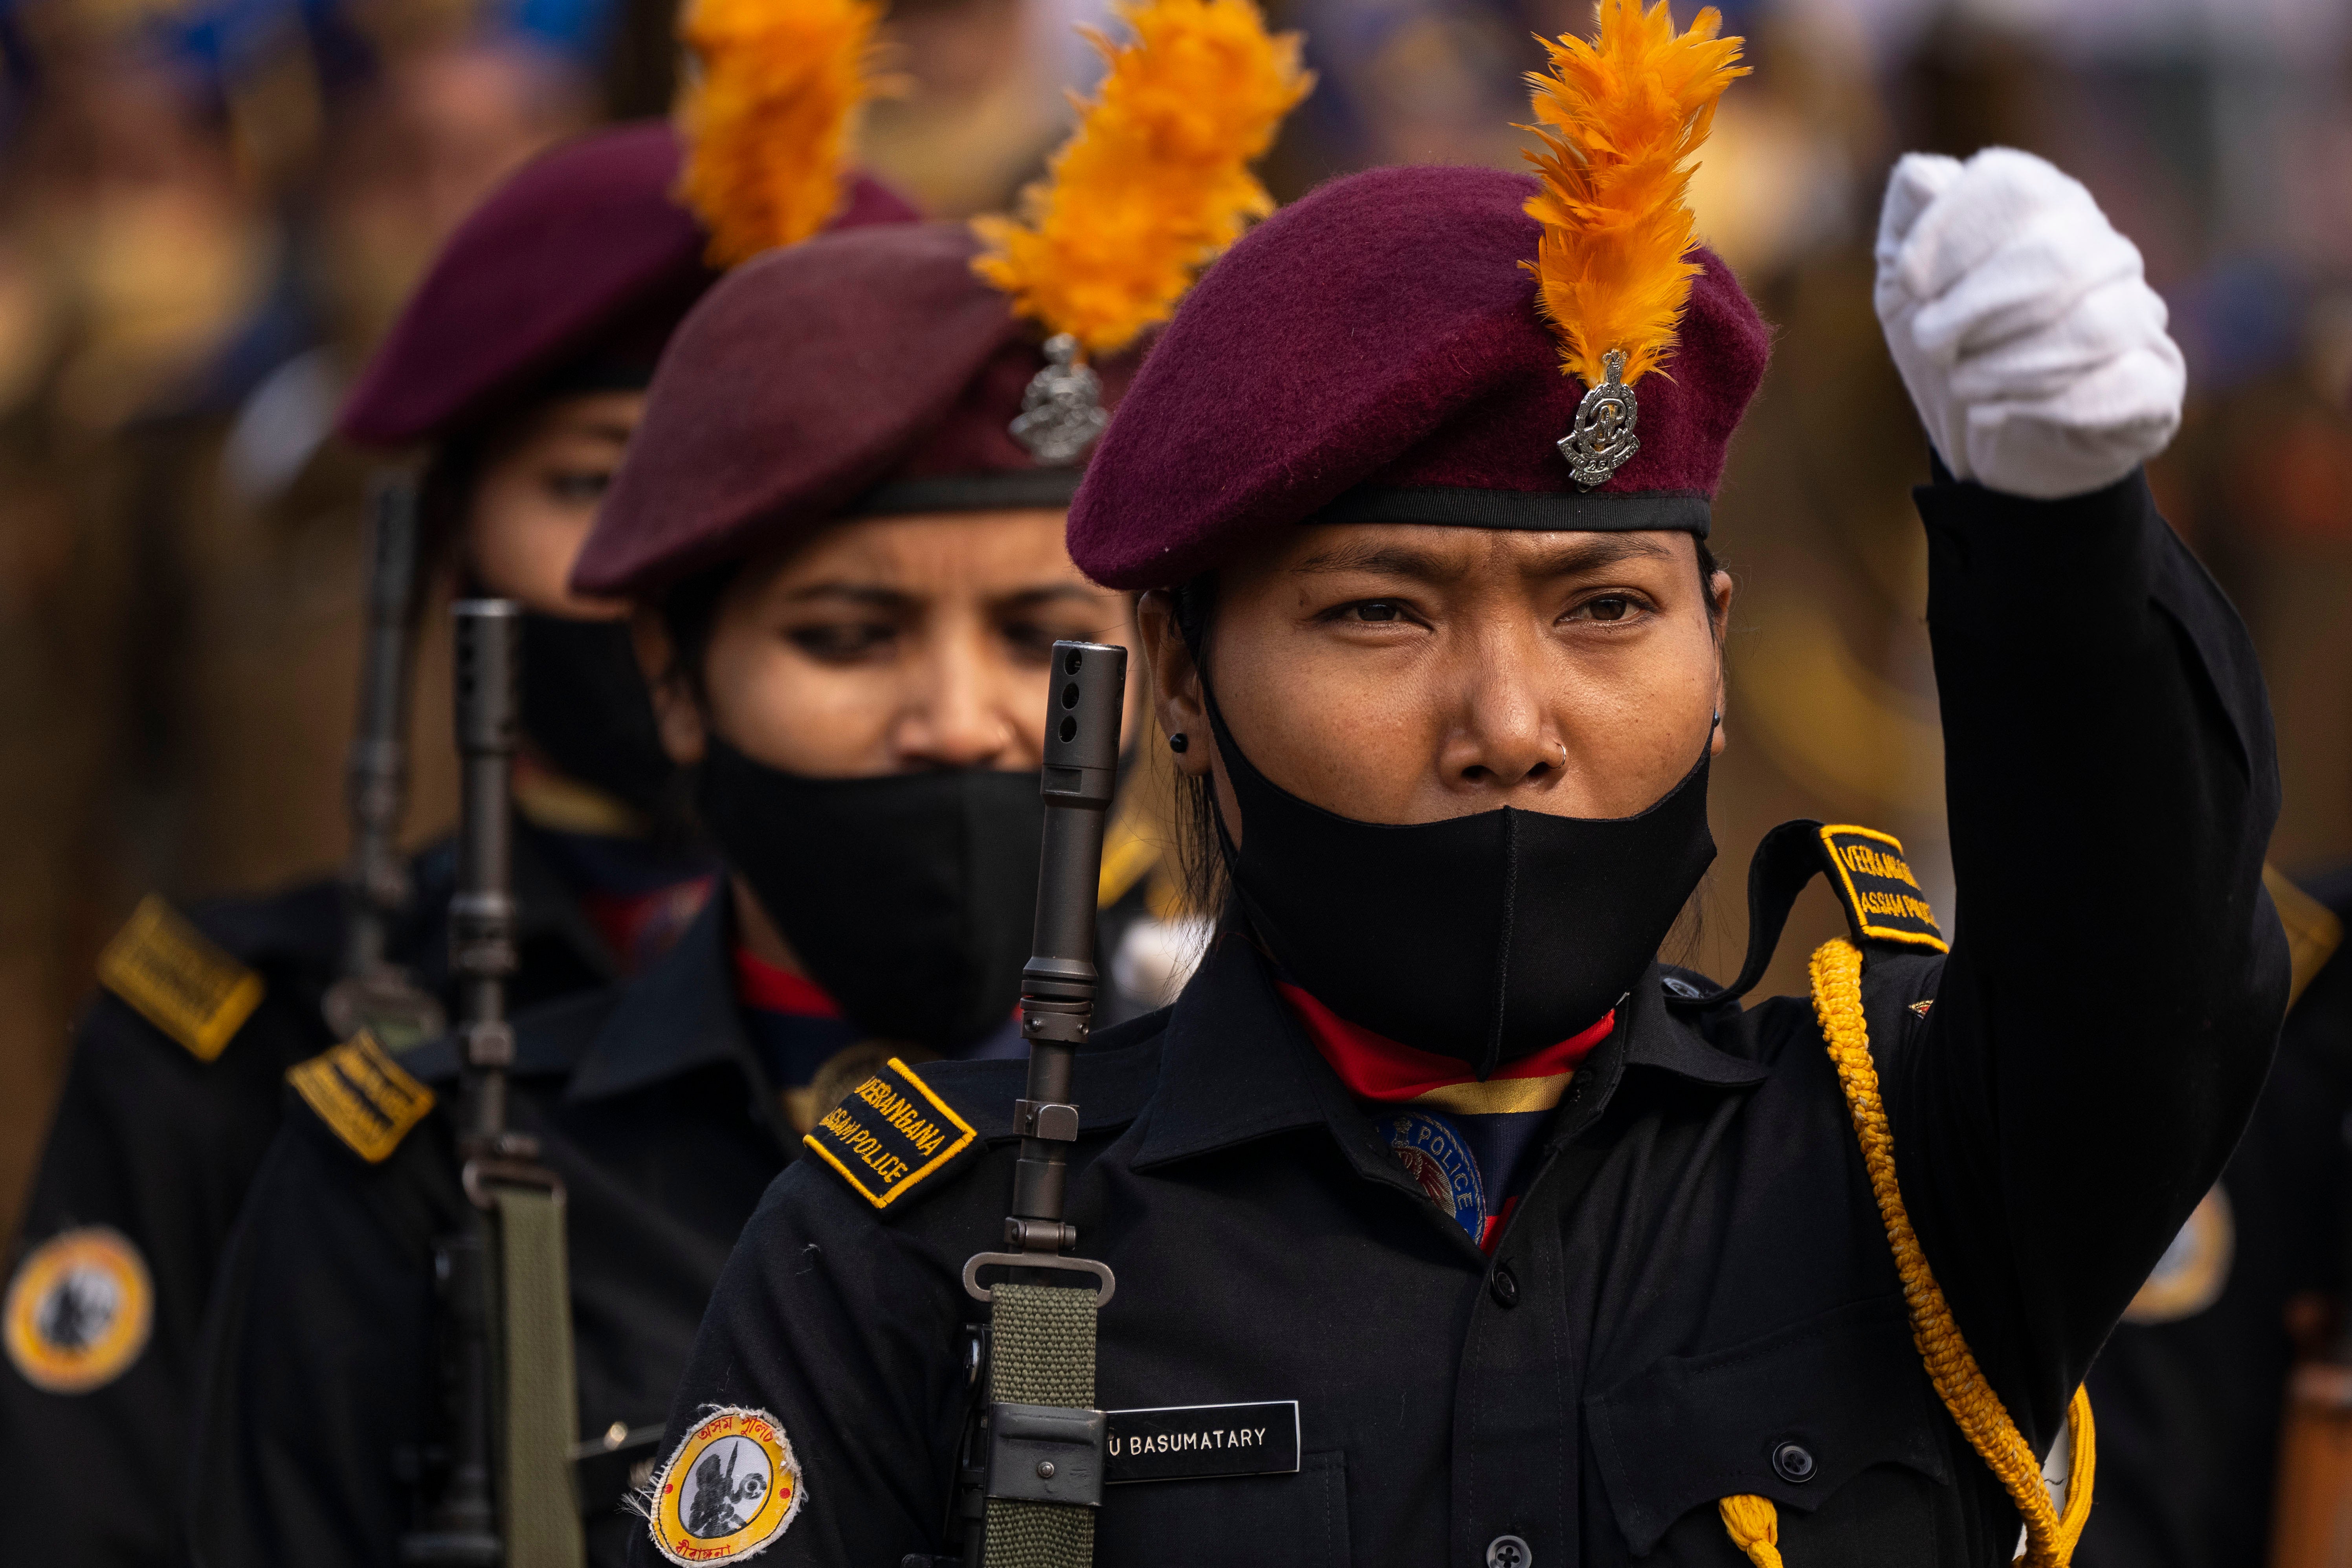 More security for Narendra Modi: Policewomen in plain clothes